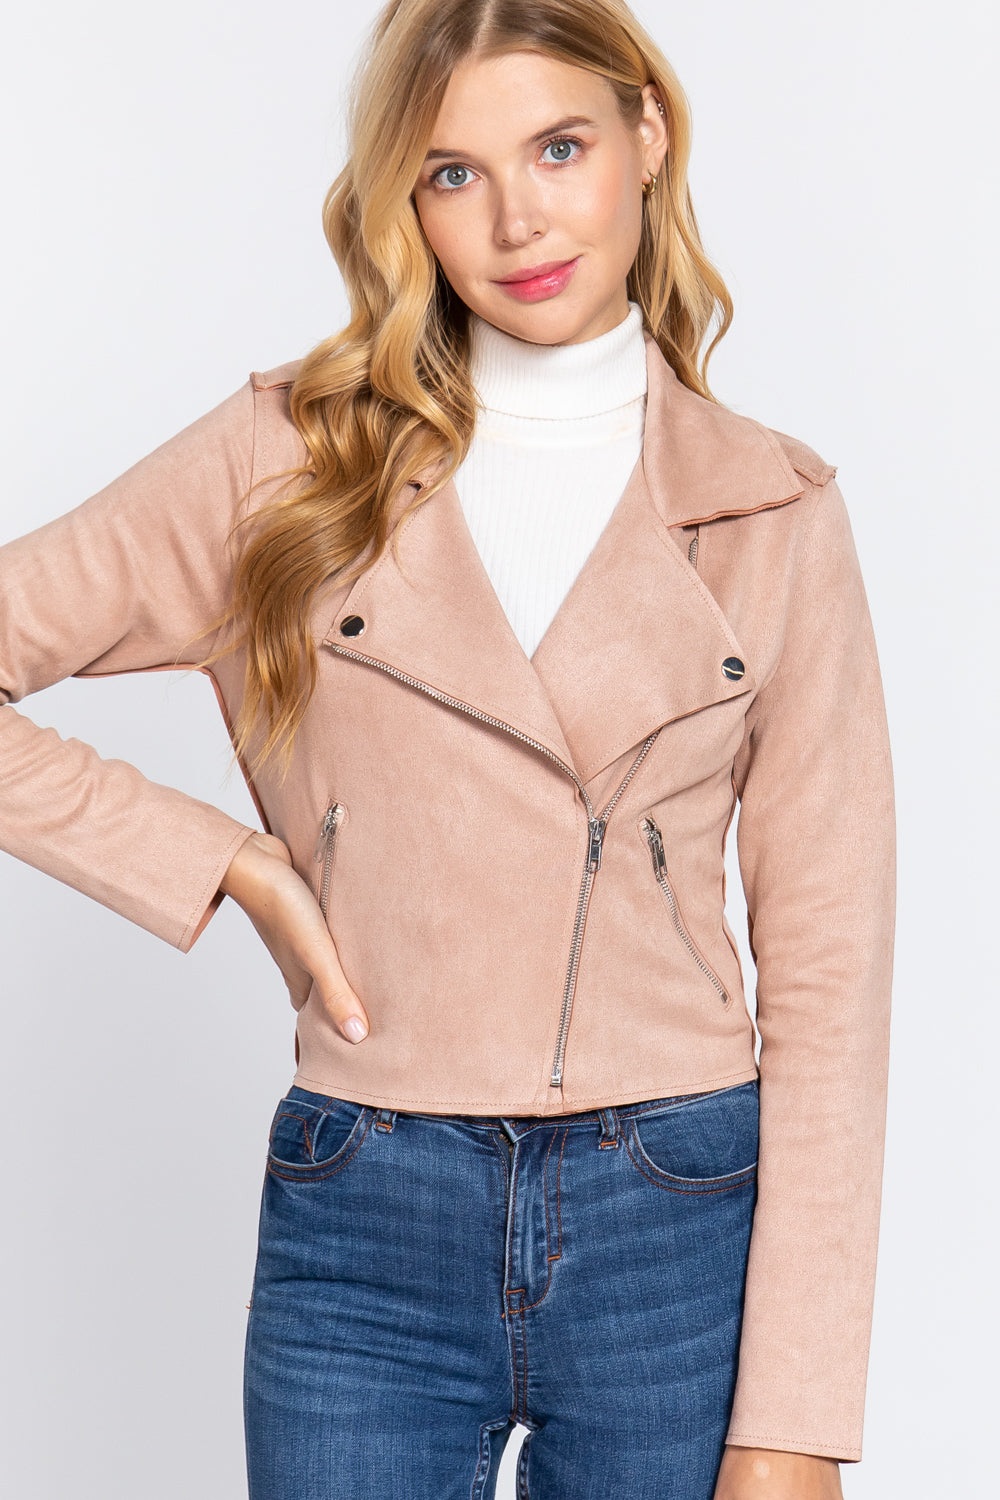 Pink - Long Slv Biker Faux Suede Short Jacket - 2 colors - womens jacket at TFC&H Co.